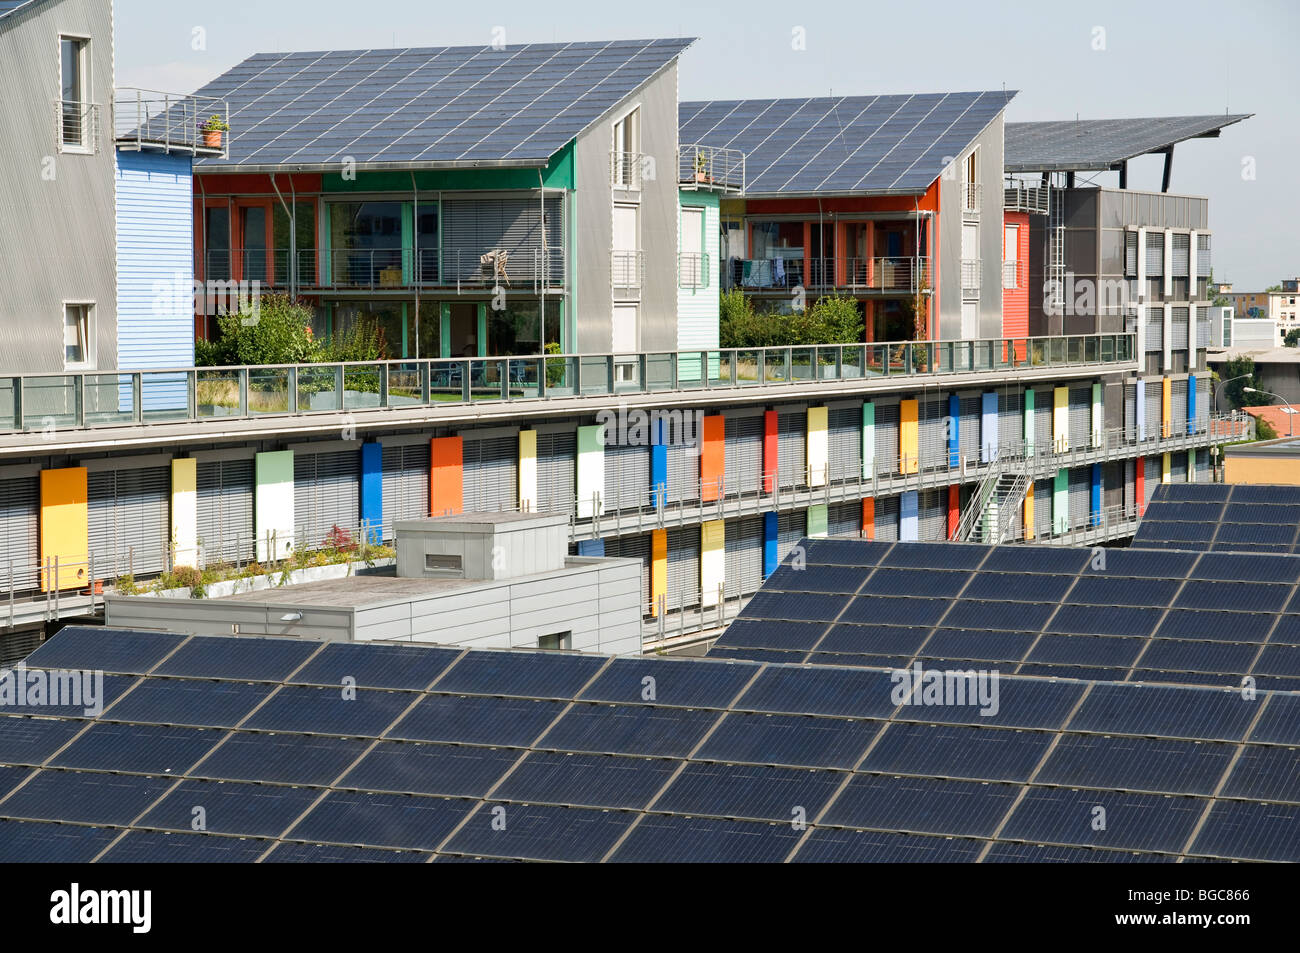 Solarsiedlung solar community, Vauban, Freiburg, Baden-Wuerttemberg, Germany, Europe Stock Photo